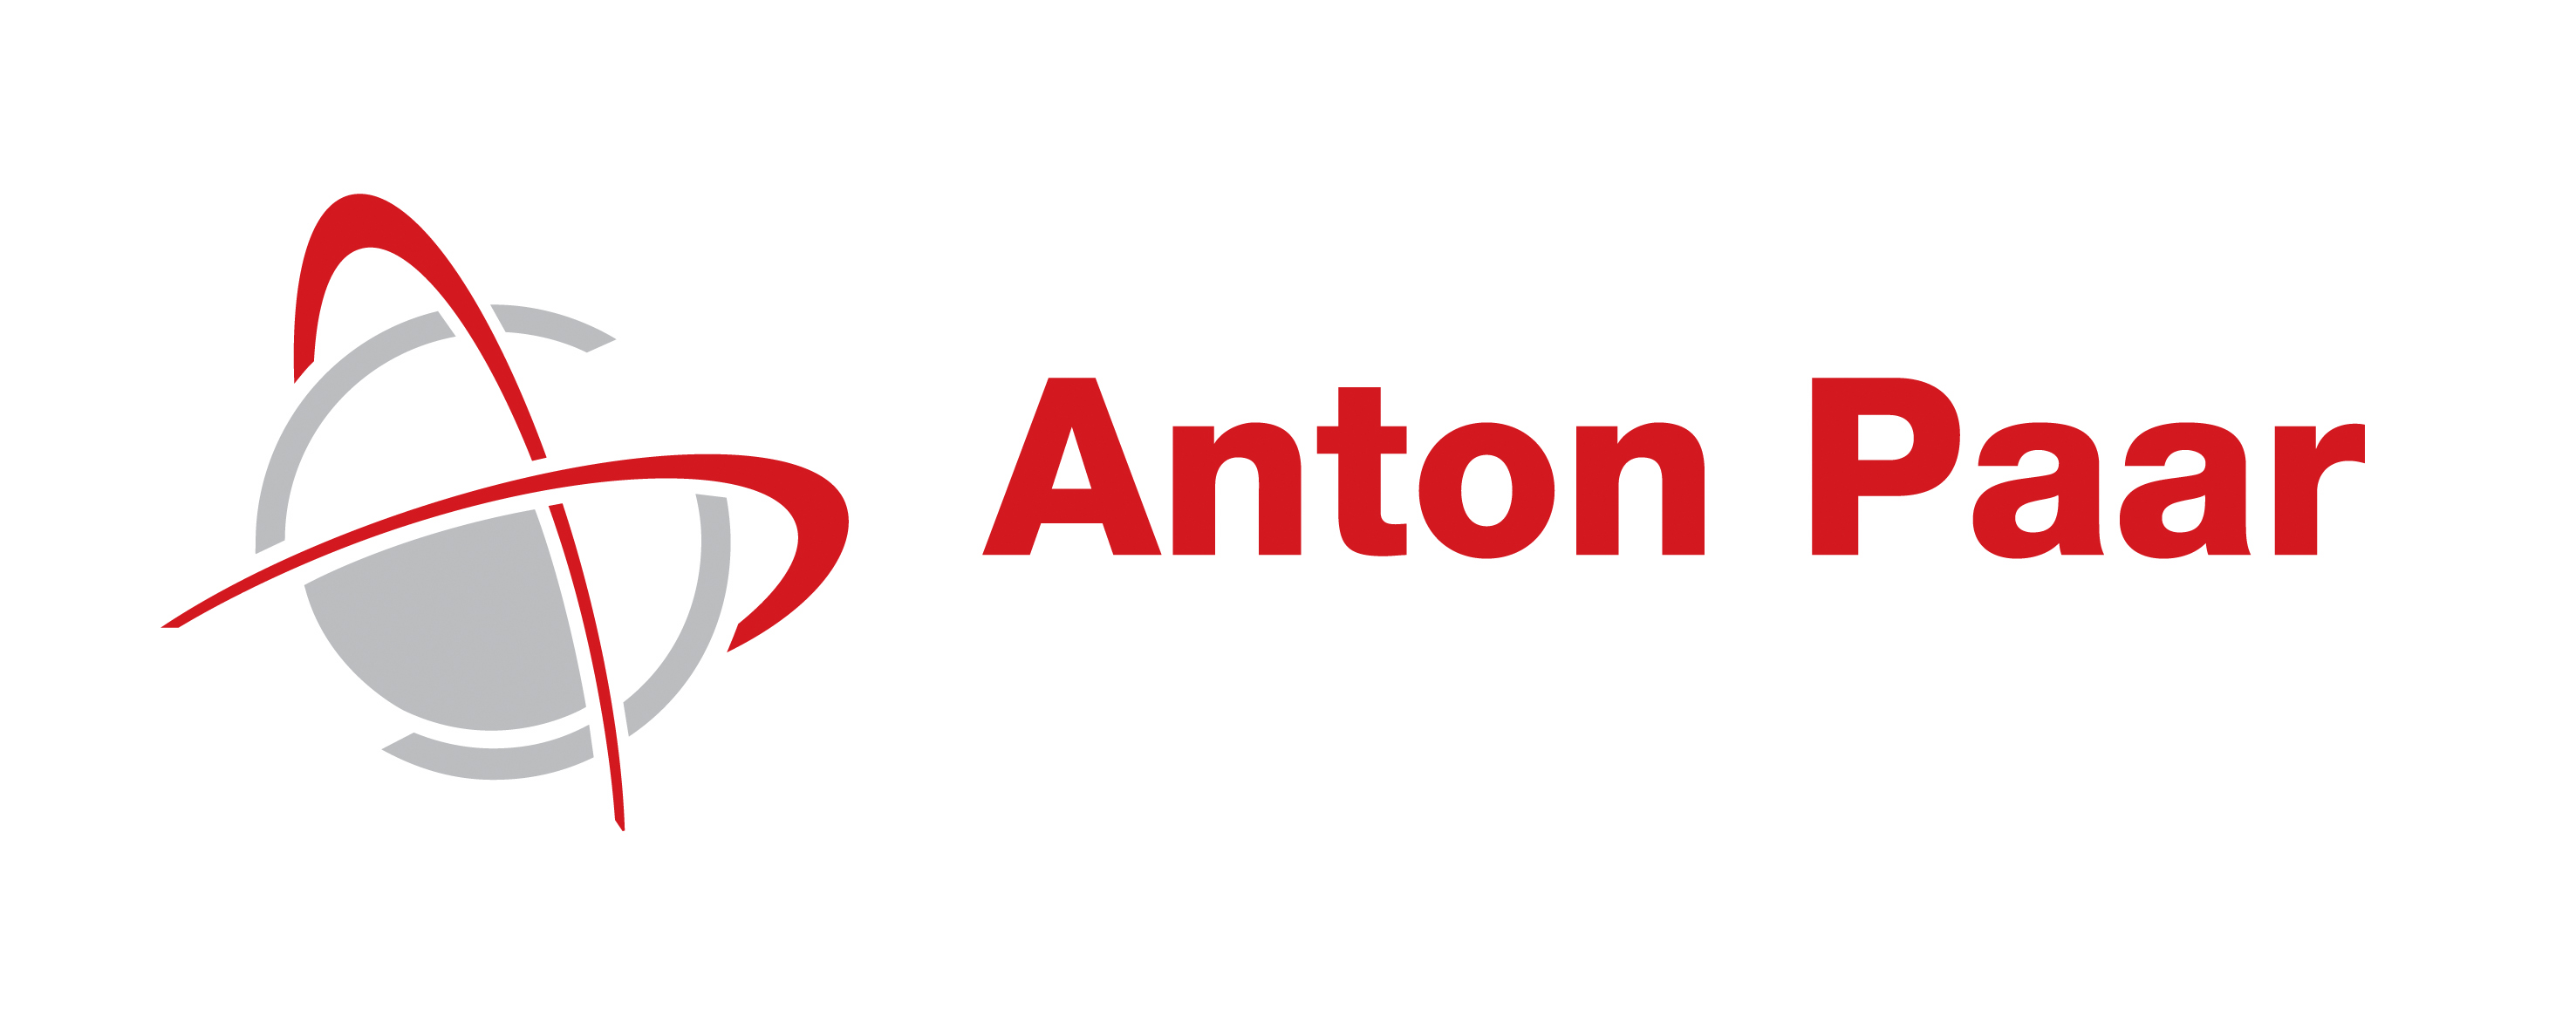 AntonPaar_logo